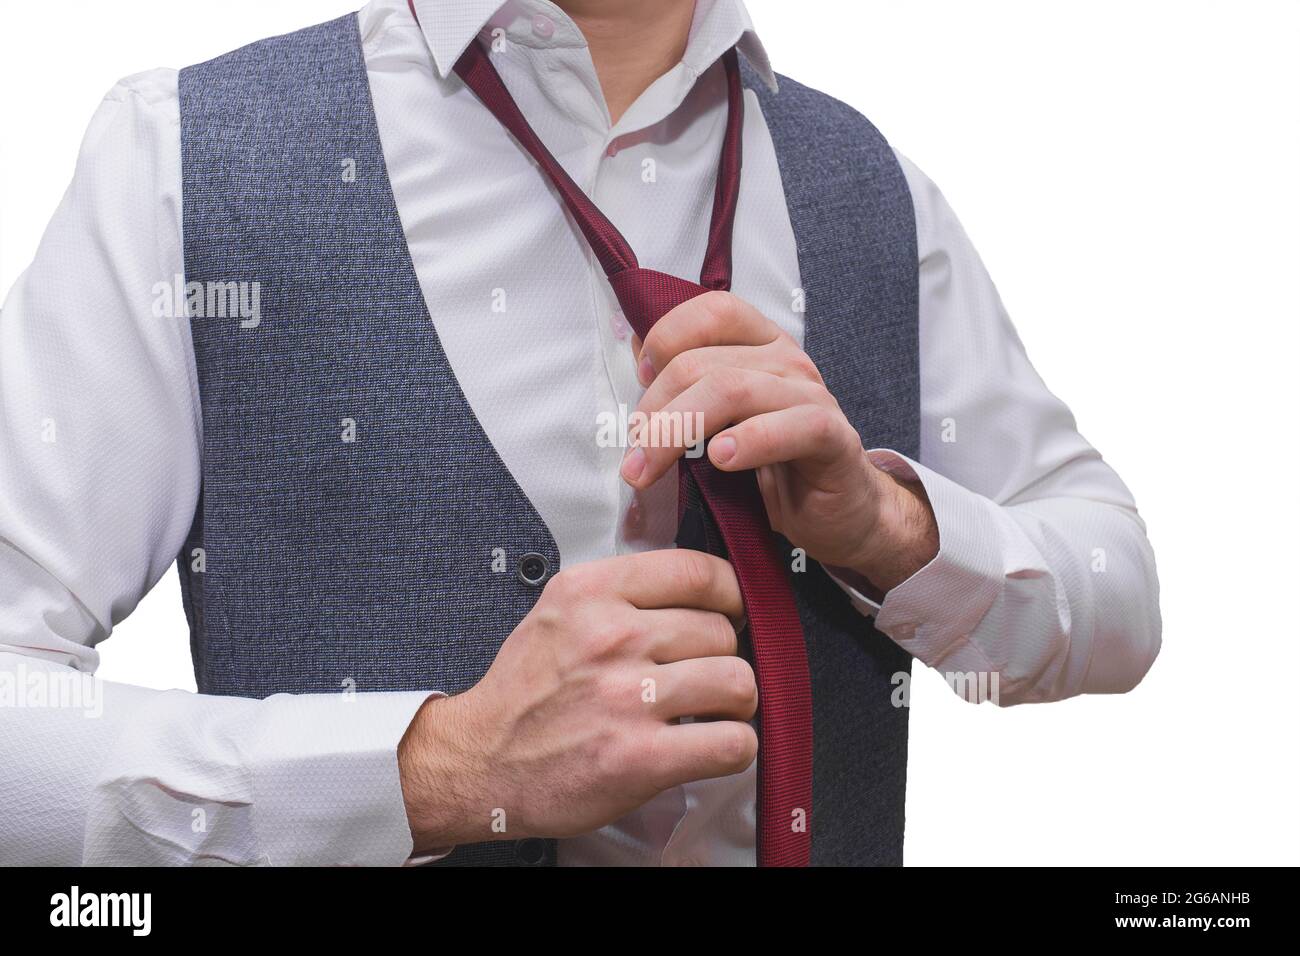 White Shirt Red Tie Businessman Stock Photo 54847642